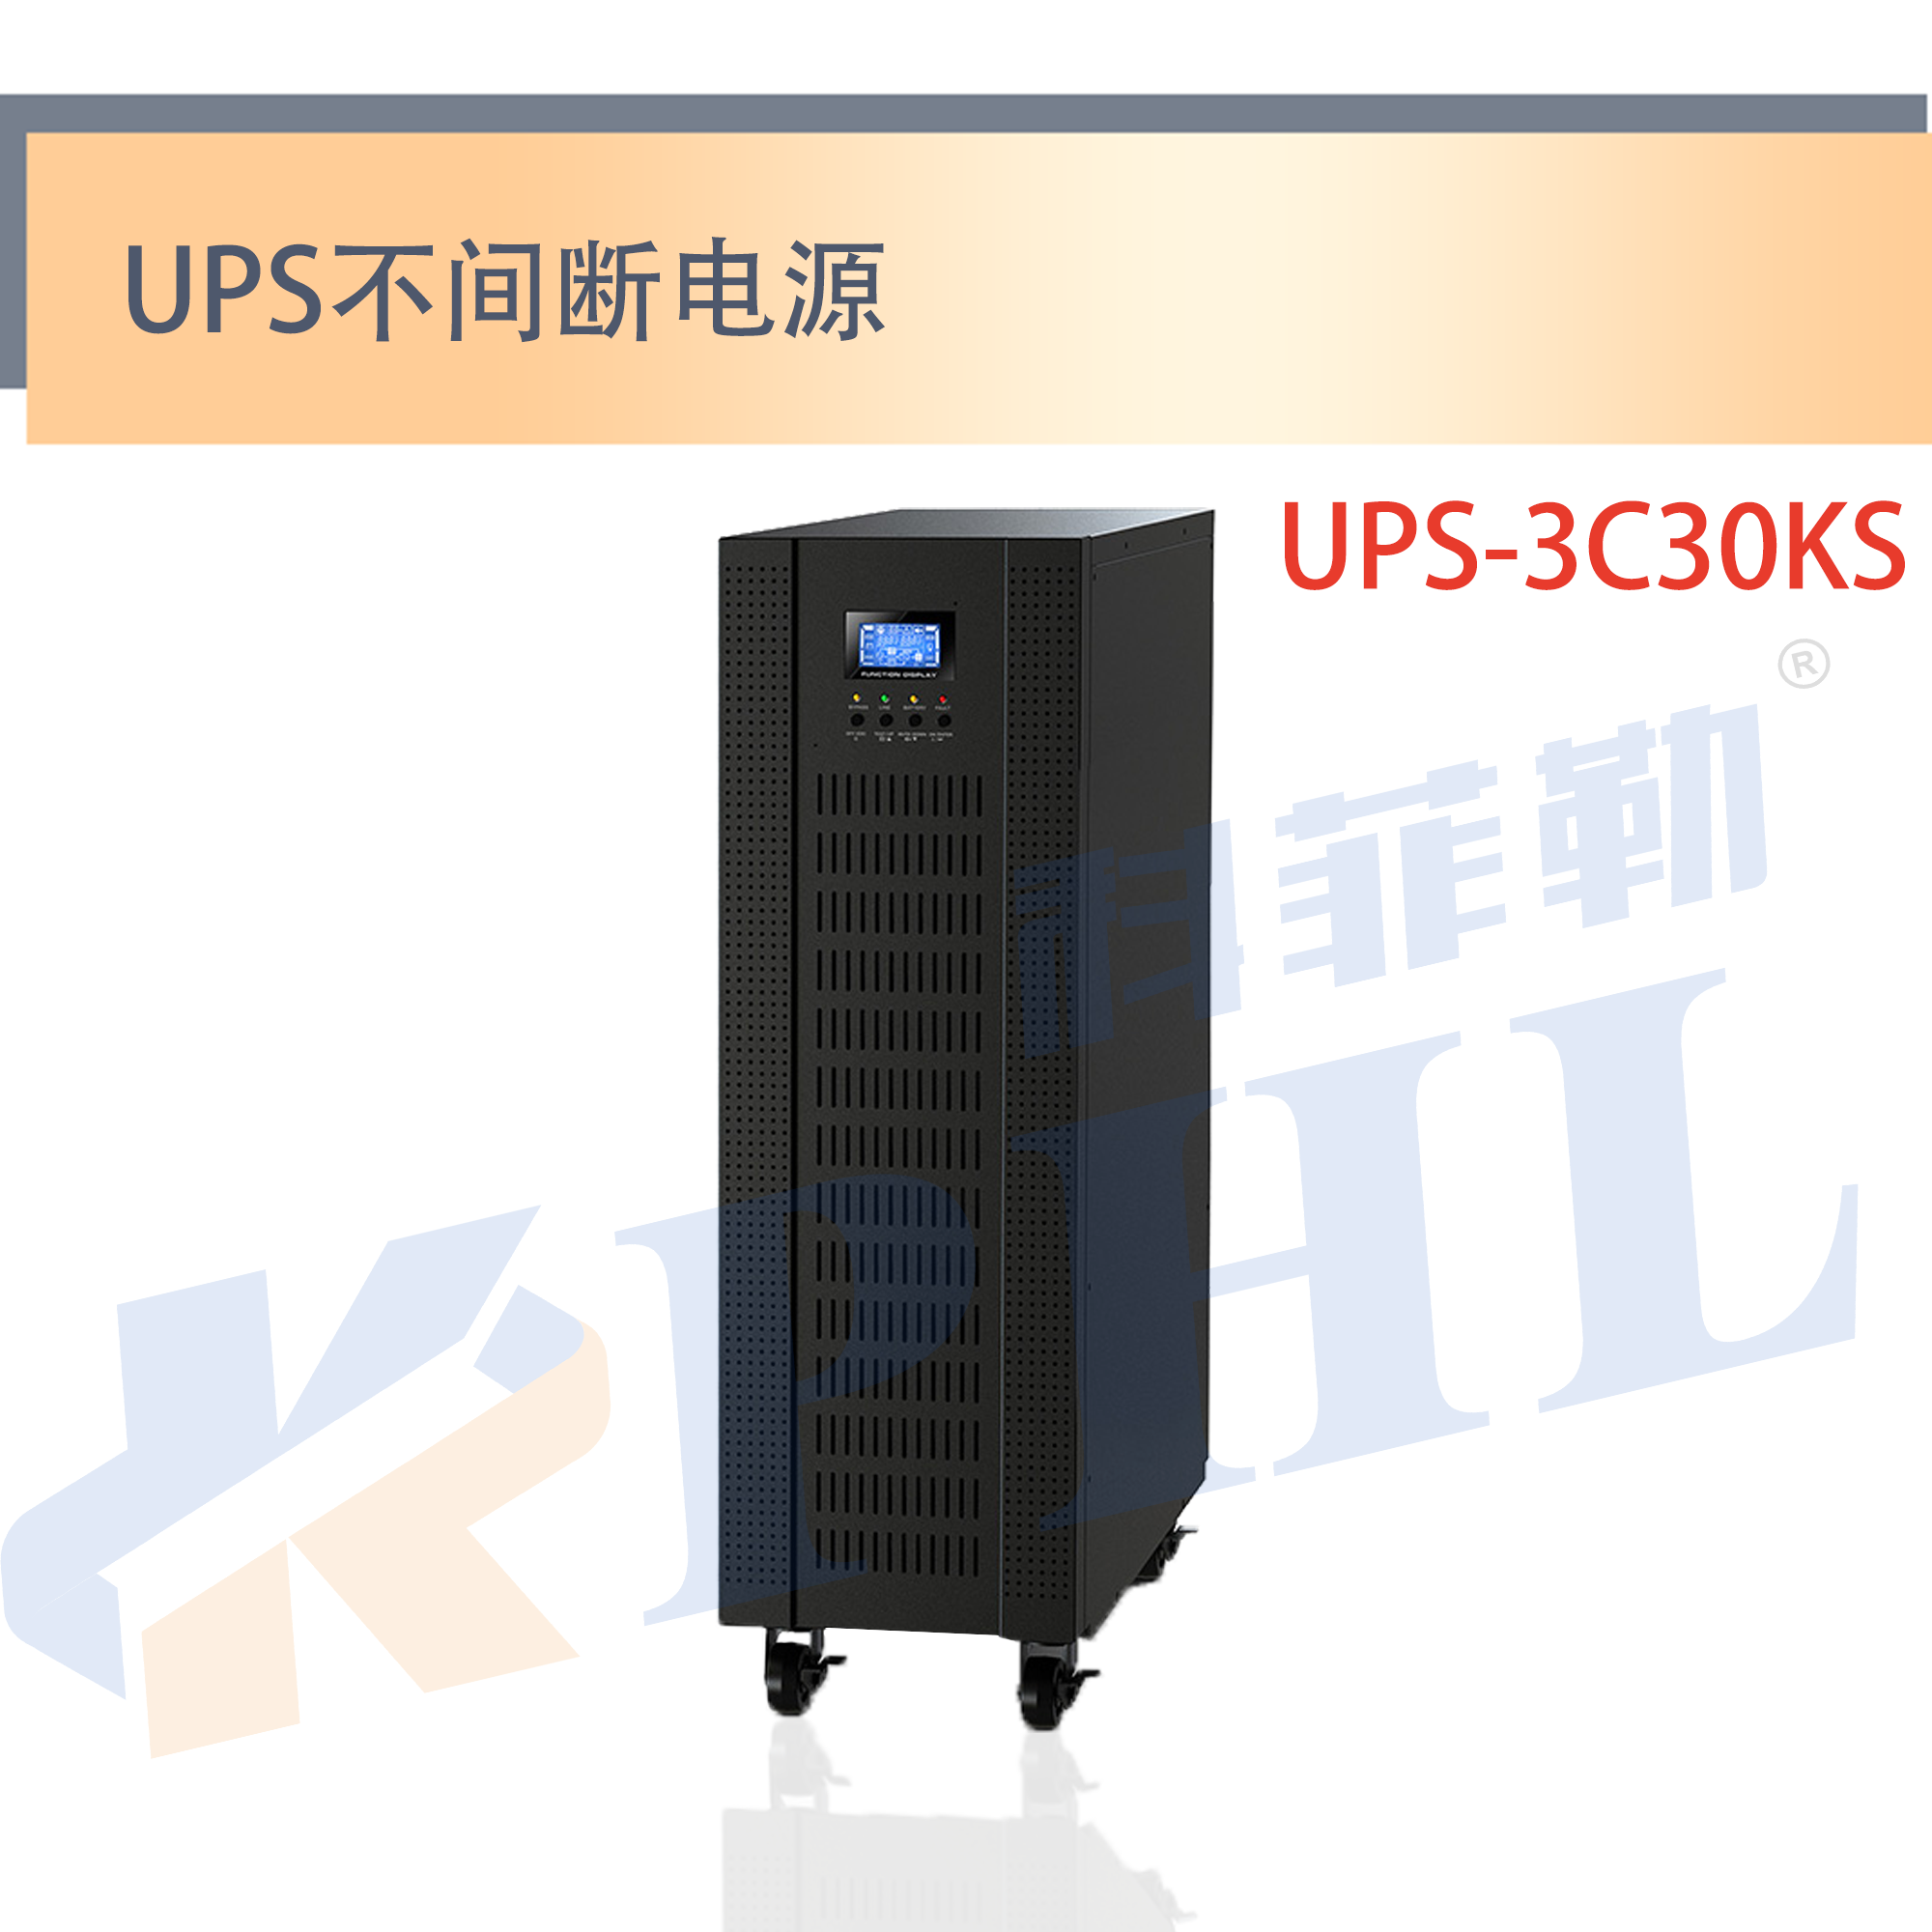 UPS-3C30KS